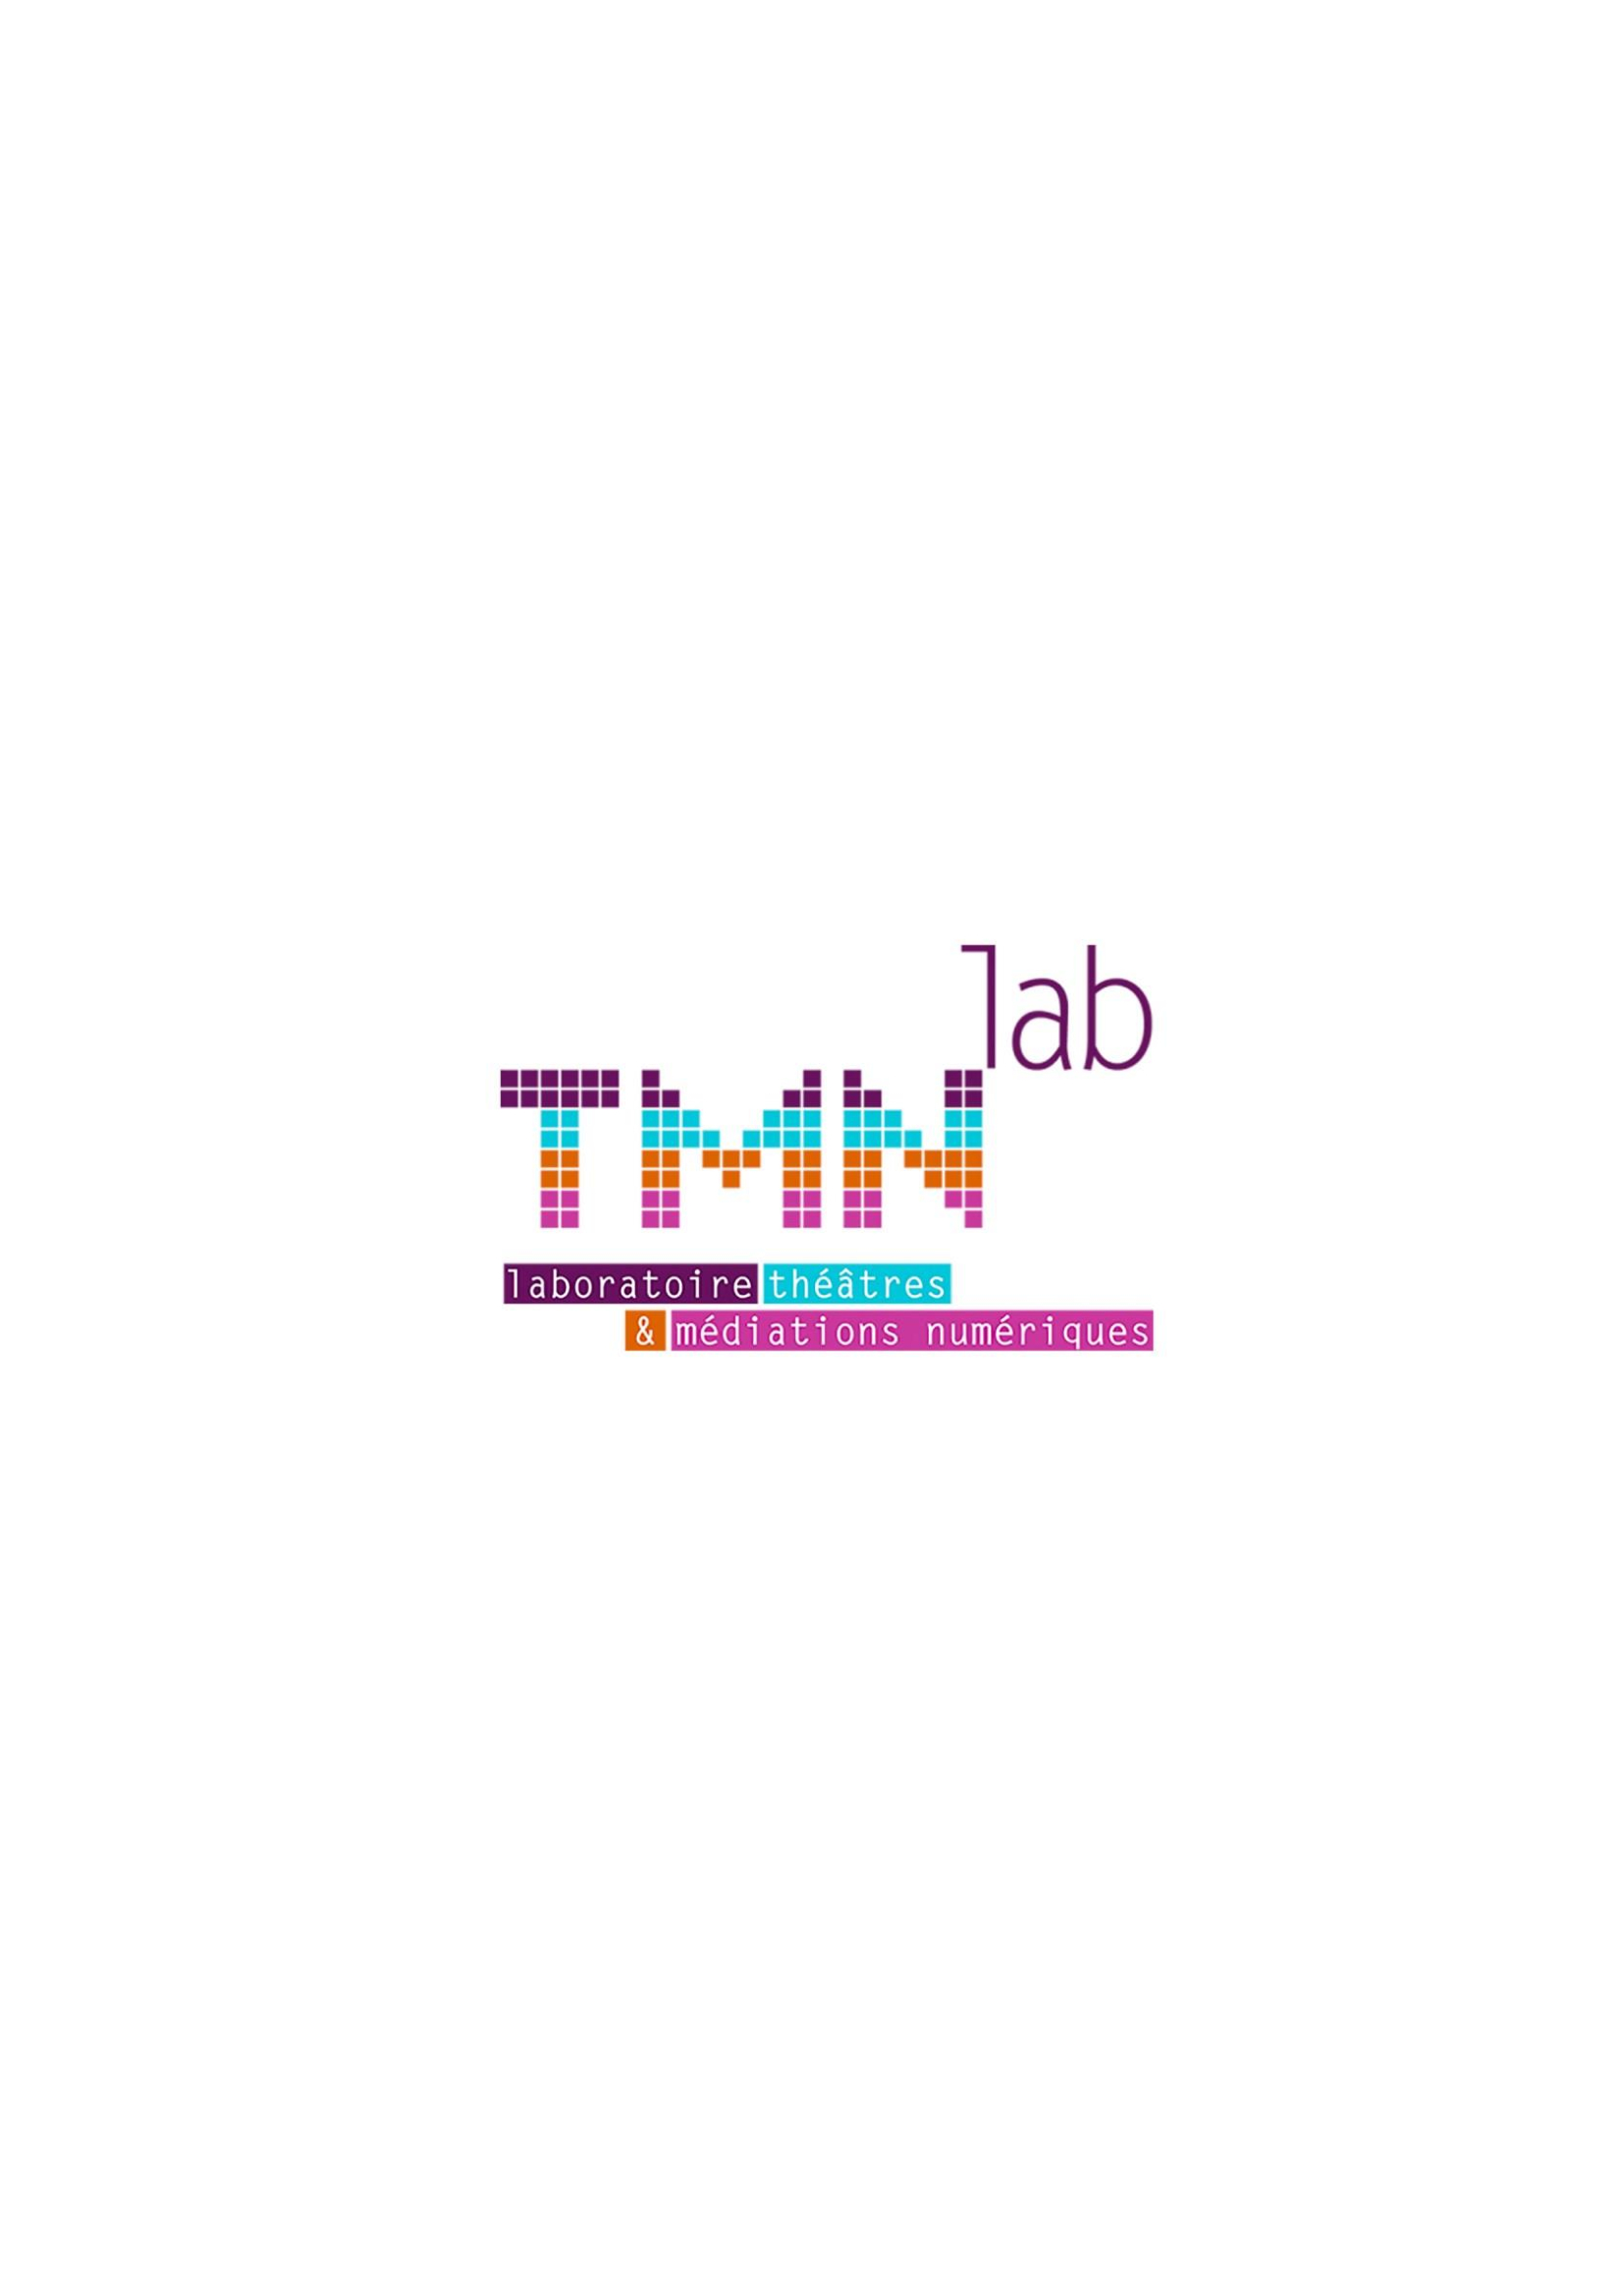 tmnlab-logo-w